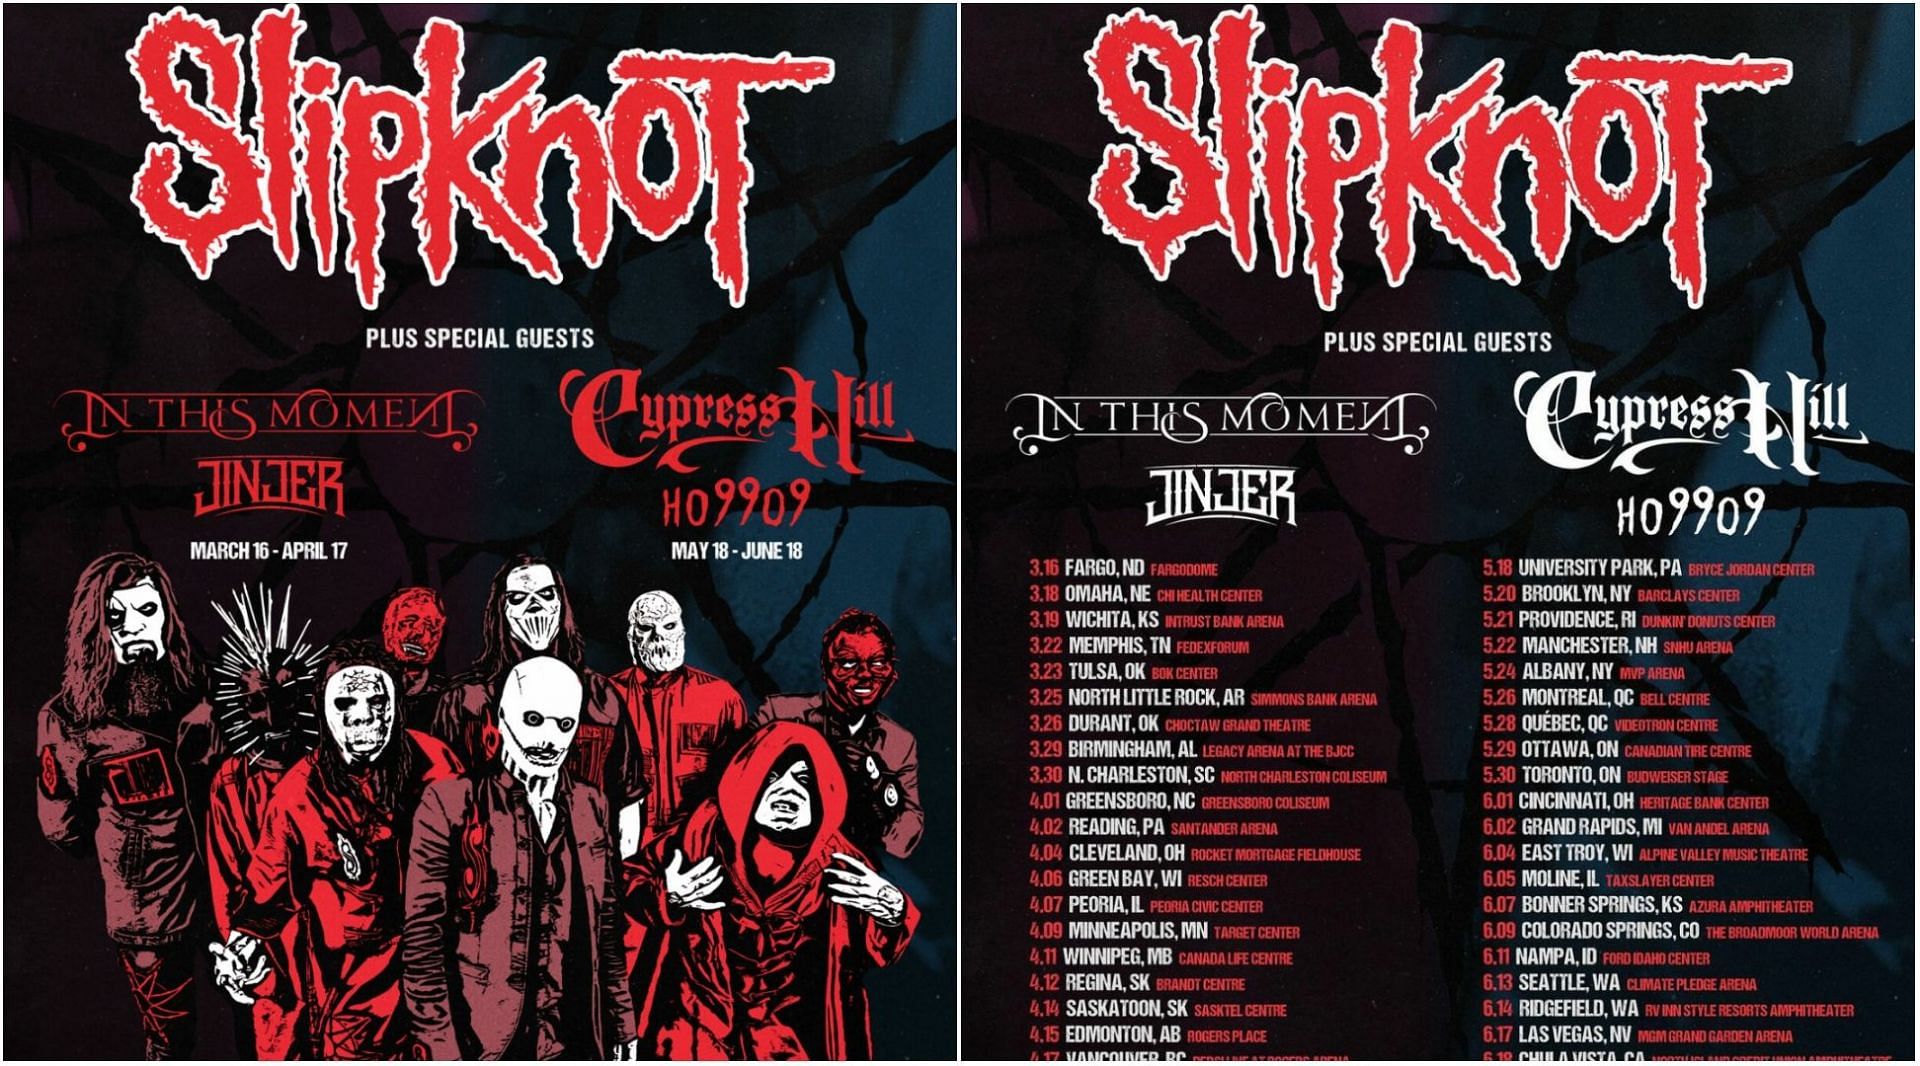 Slipknot announce their 2022 summer/spring tour dates (Images via Knotfest.com)